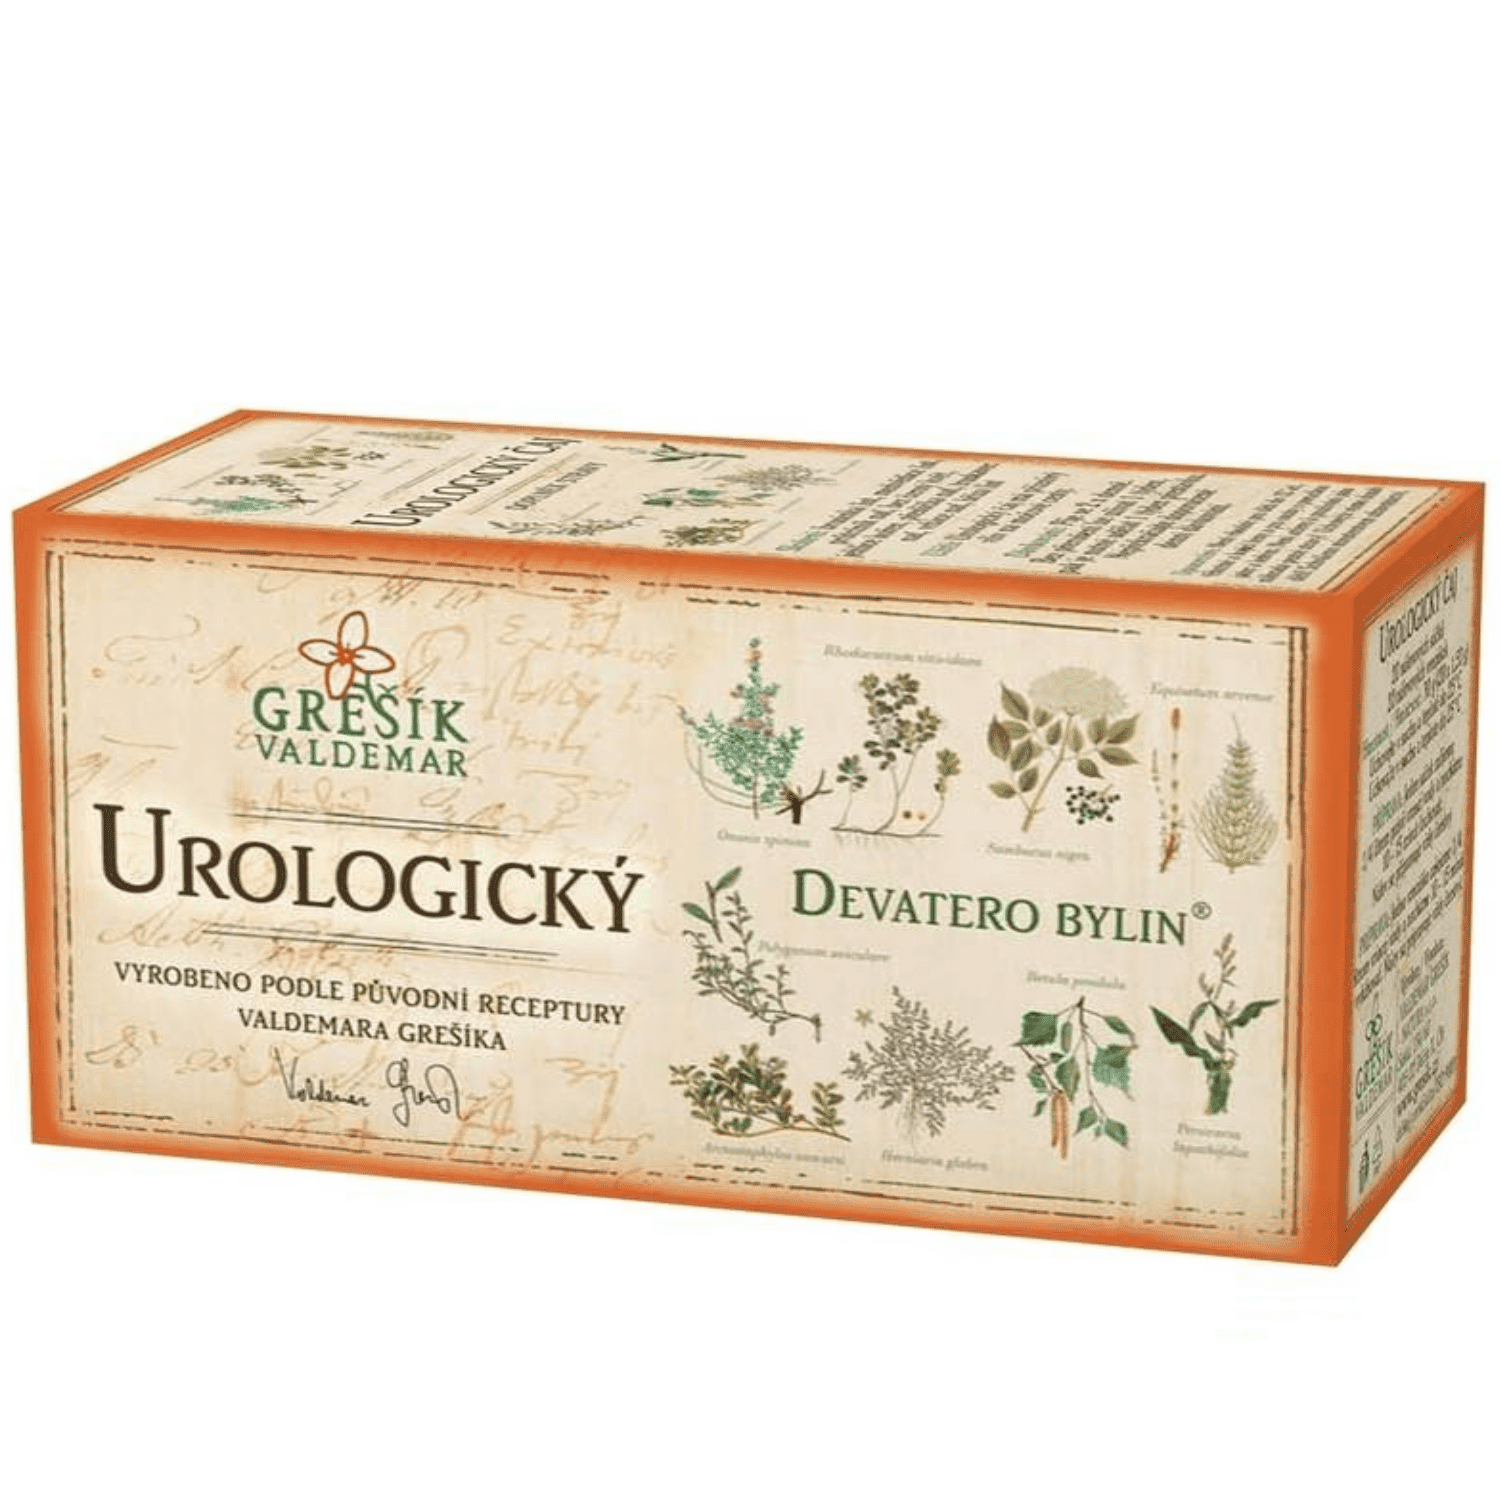 Urologický čaj (30g)